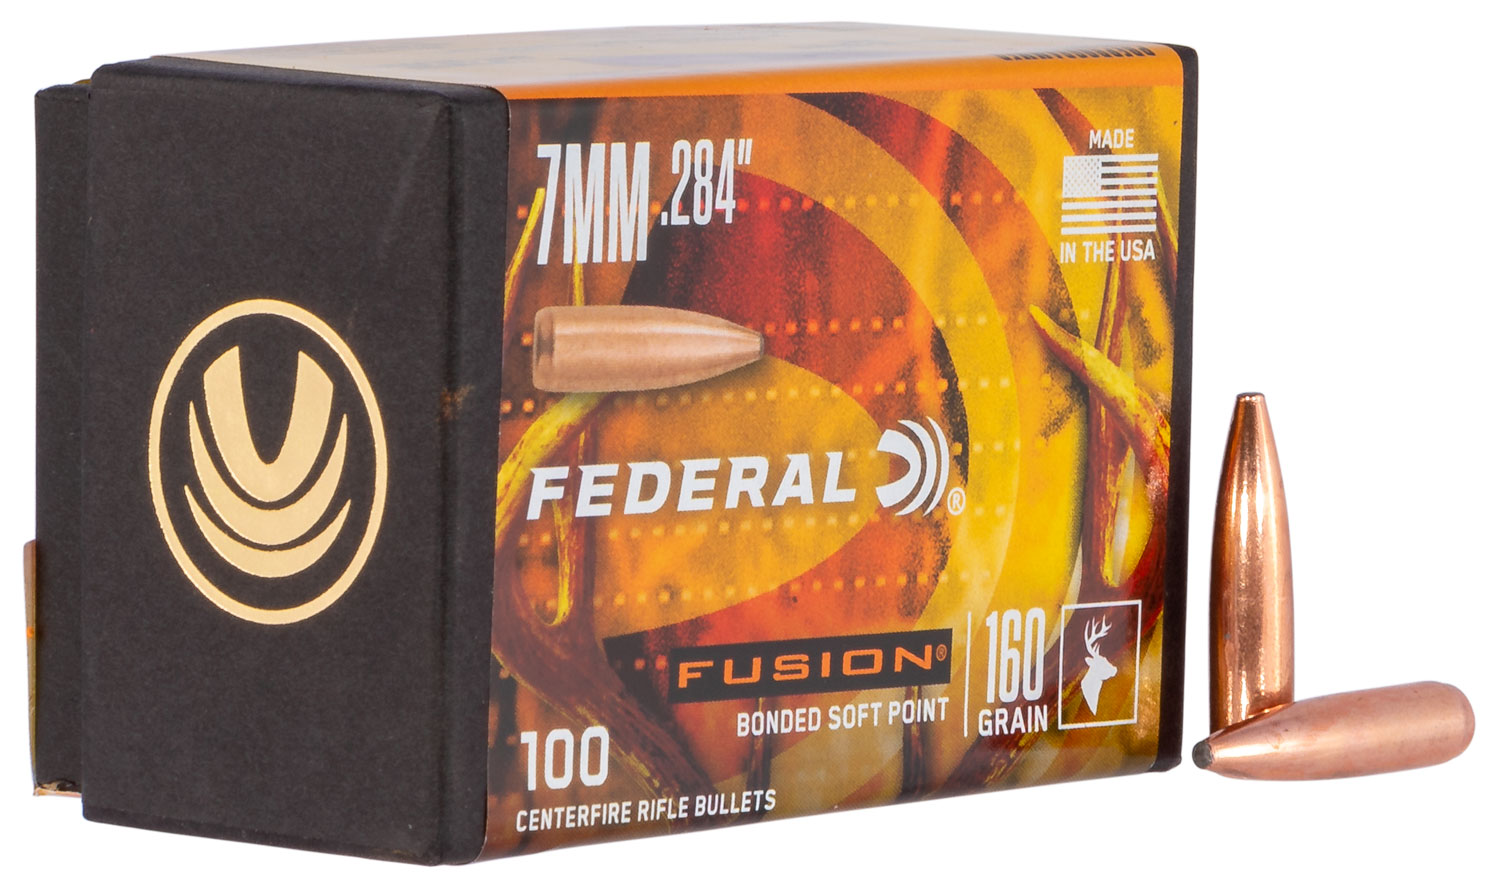 Federal FB284F3 Fusion Component  7mm .284 160 gr Fusion Soft Point 100 Per Box